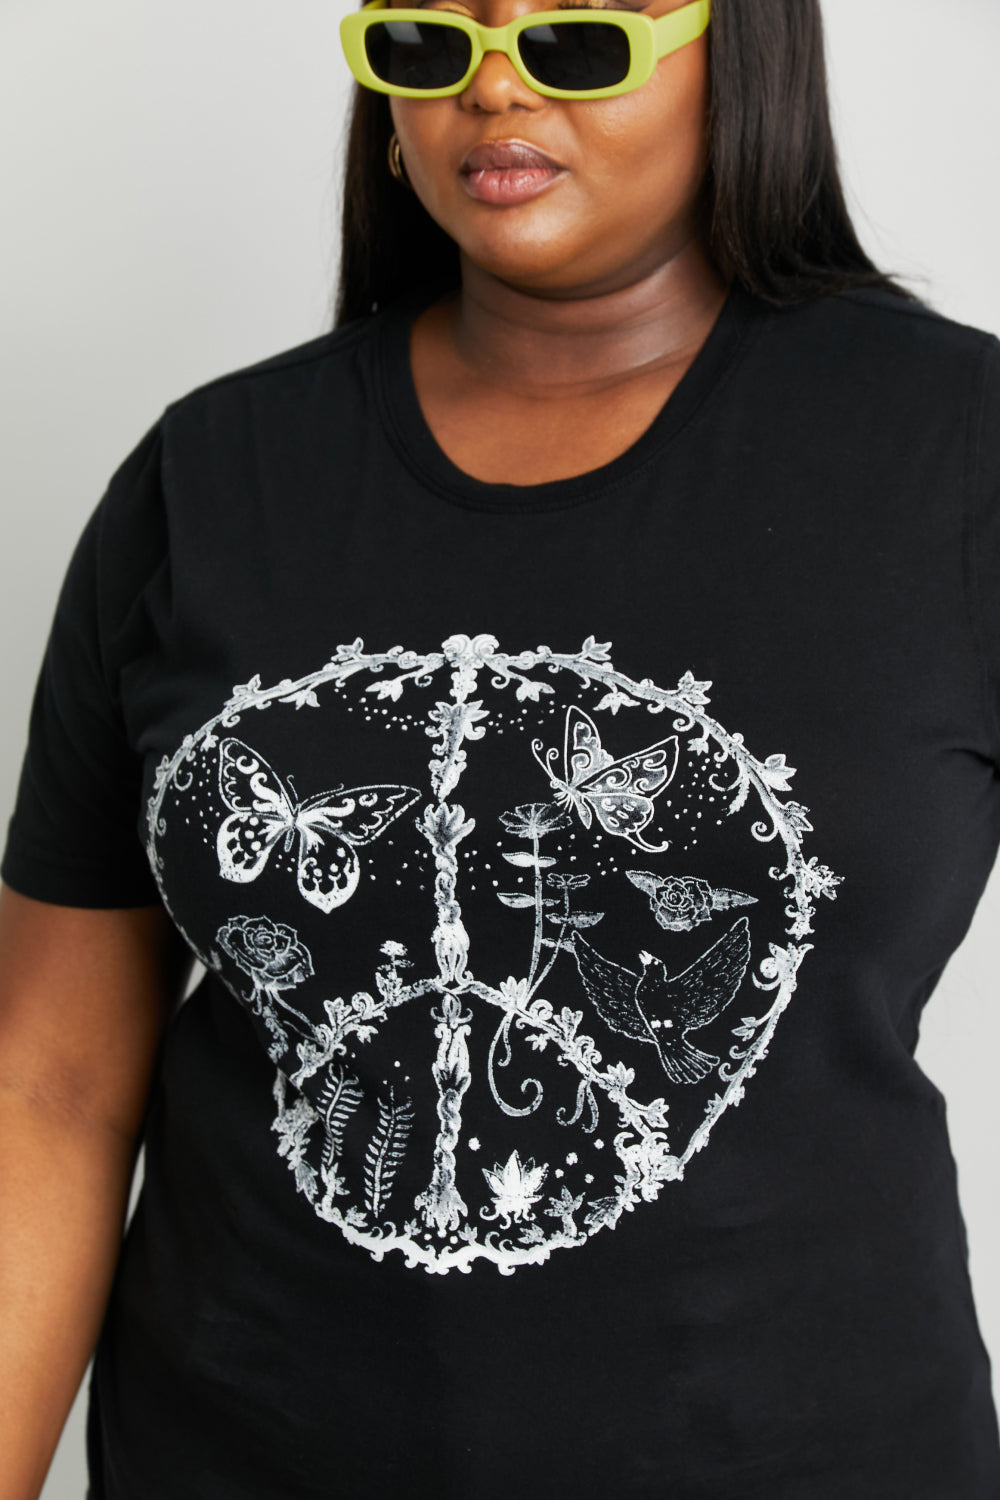 mineB Full Size Butterfly Graphic Tee Shirt | Shirts - CHANELIA